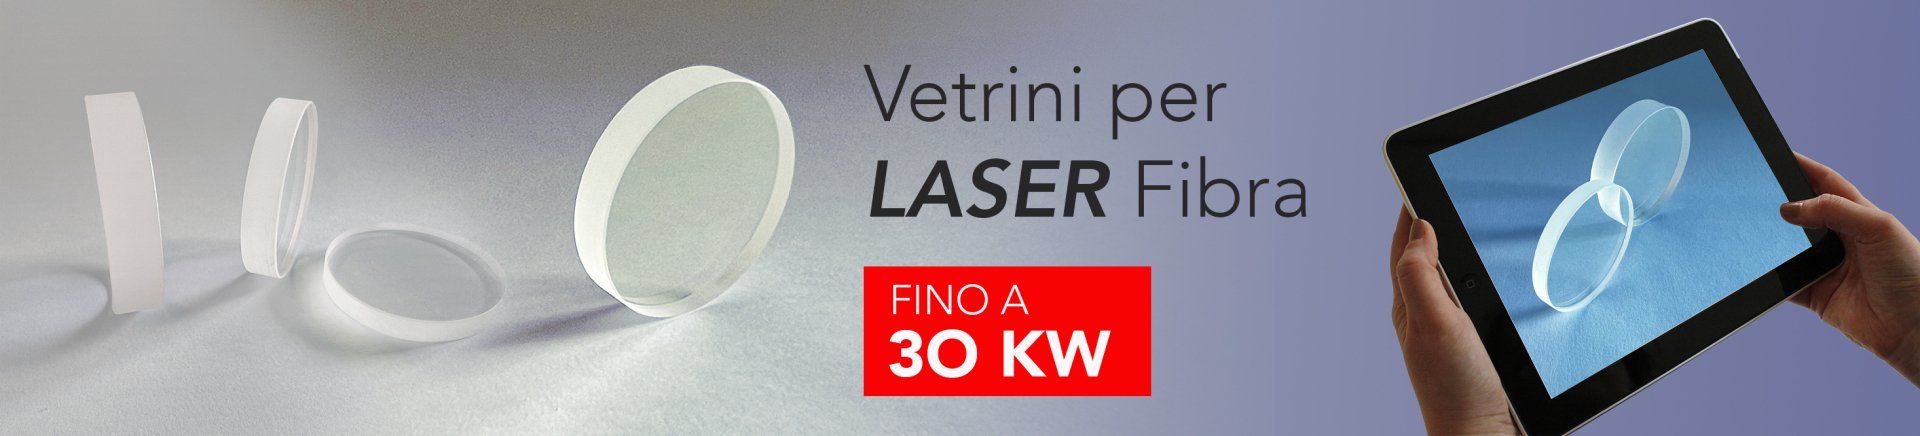 vetrini laser Bystronic®